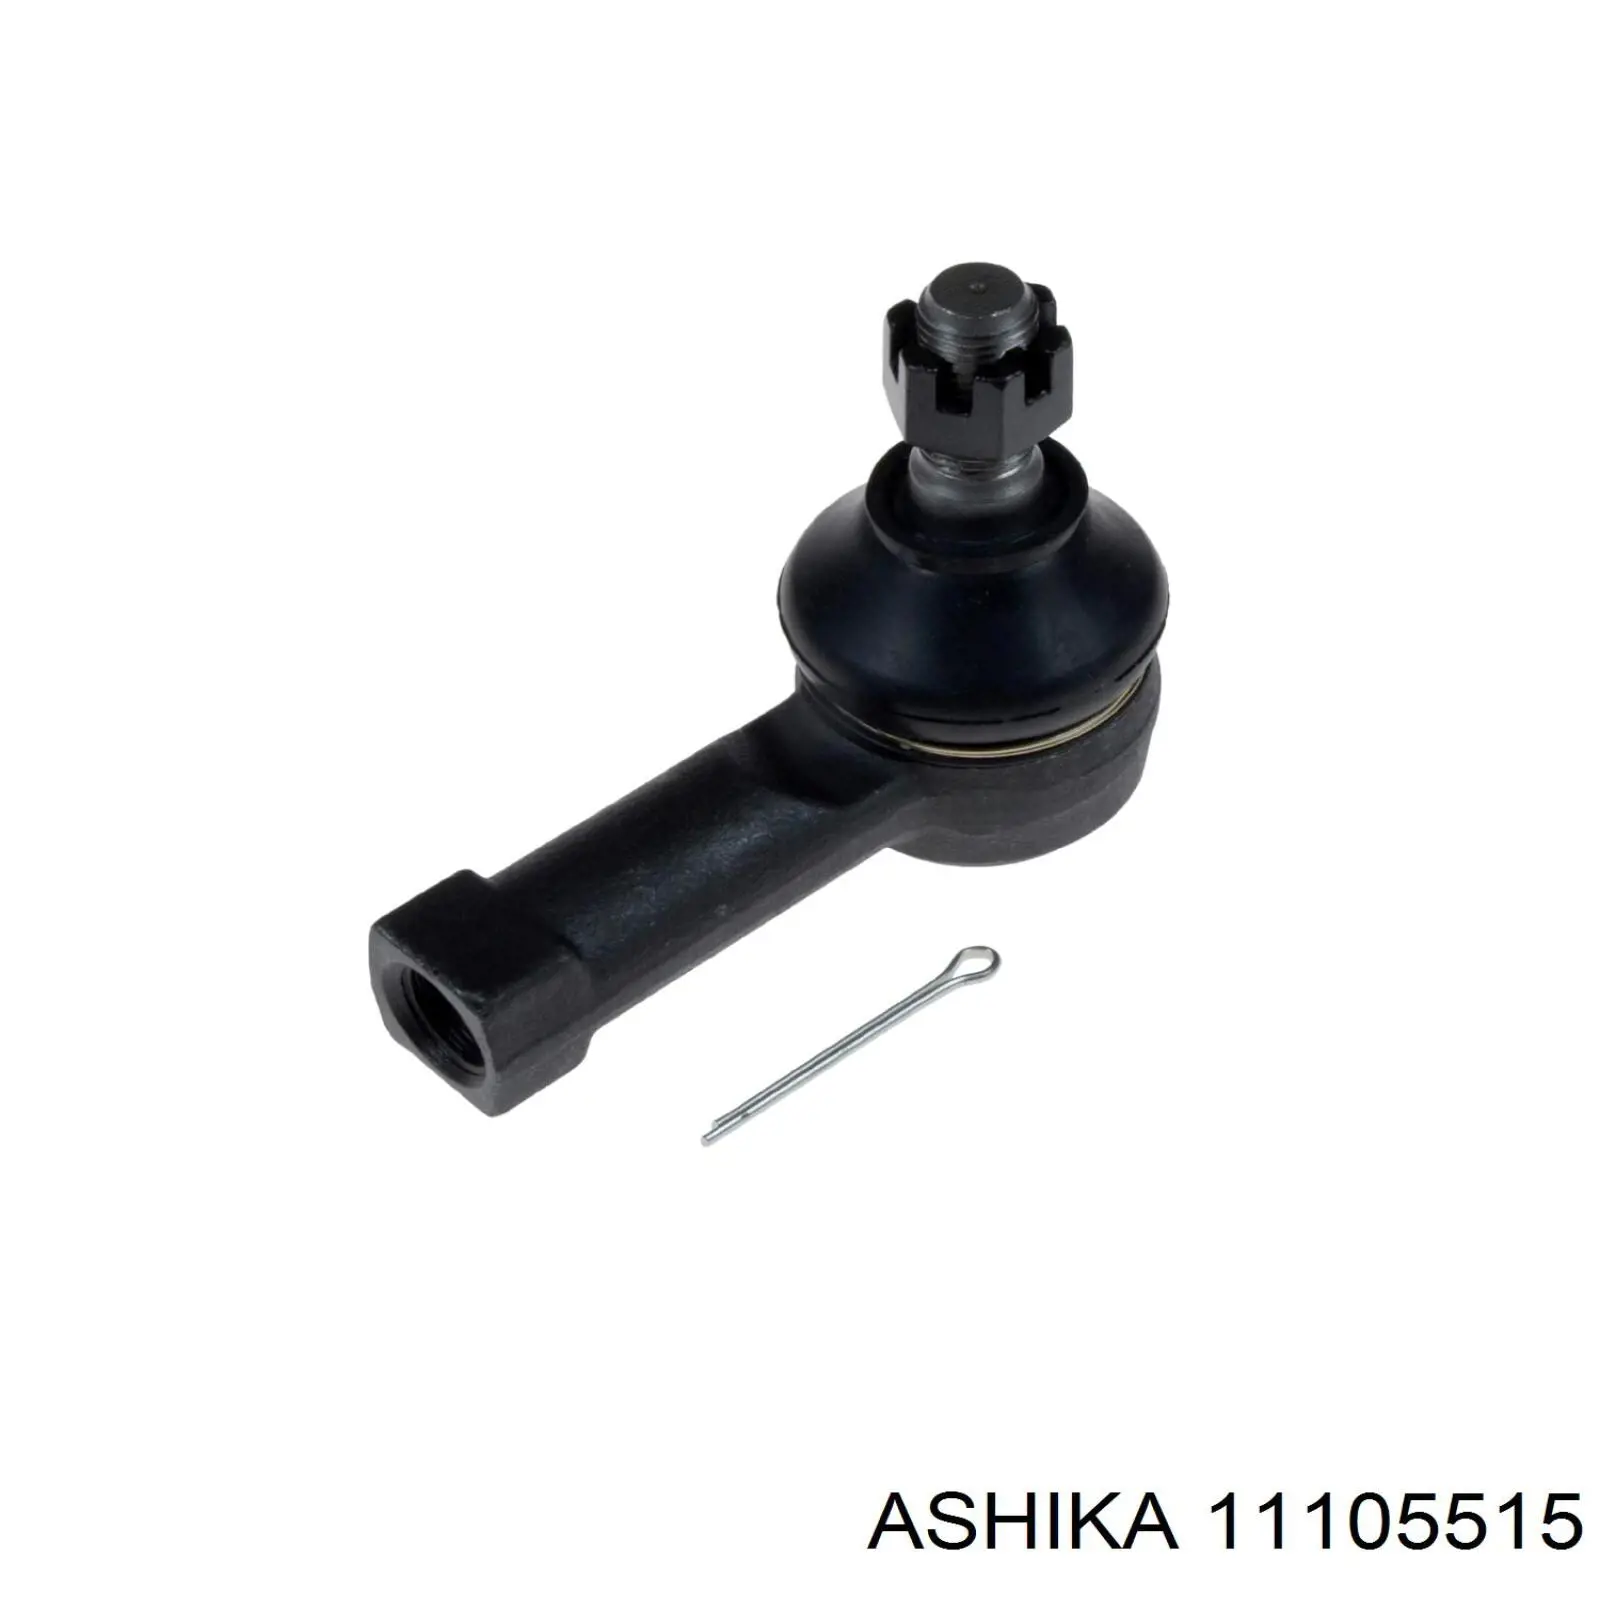 111-05-515 Ashika rótula barra de acoplamiento exterior